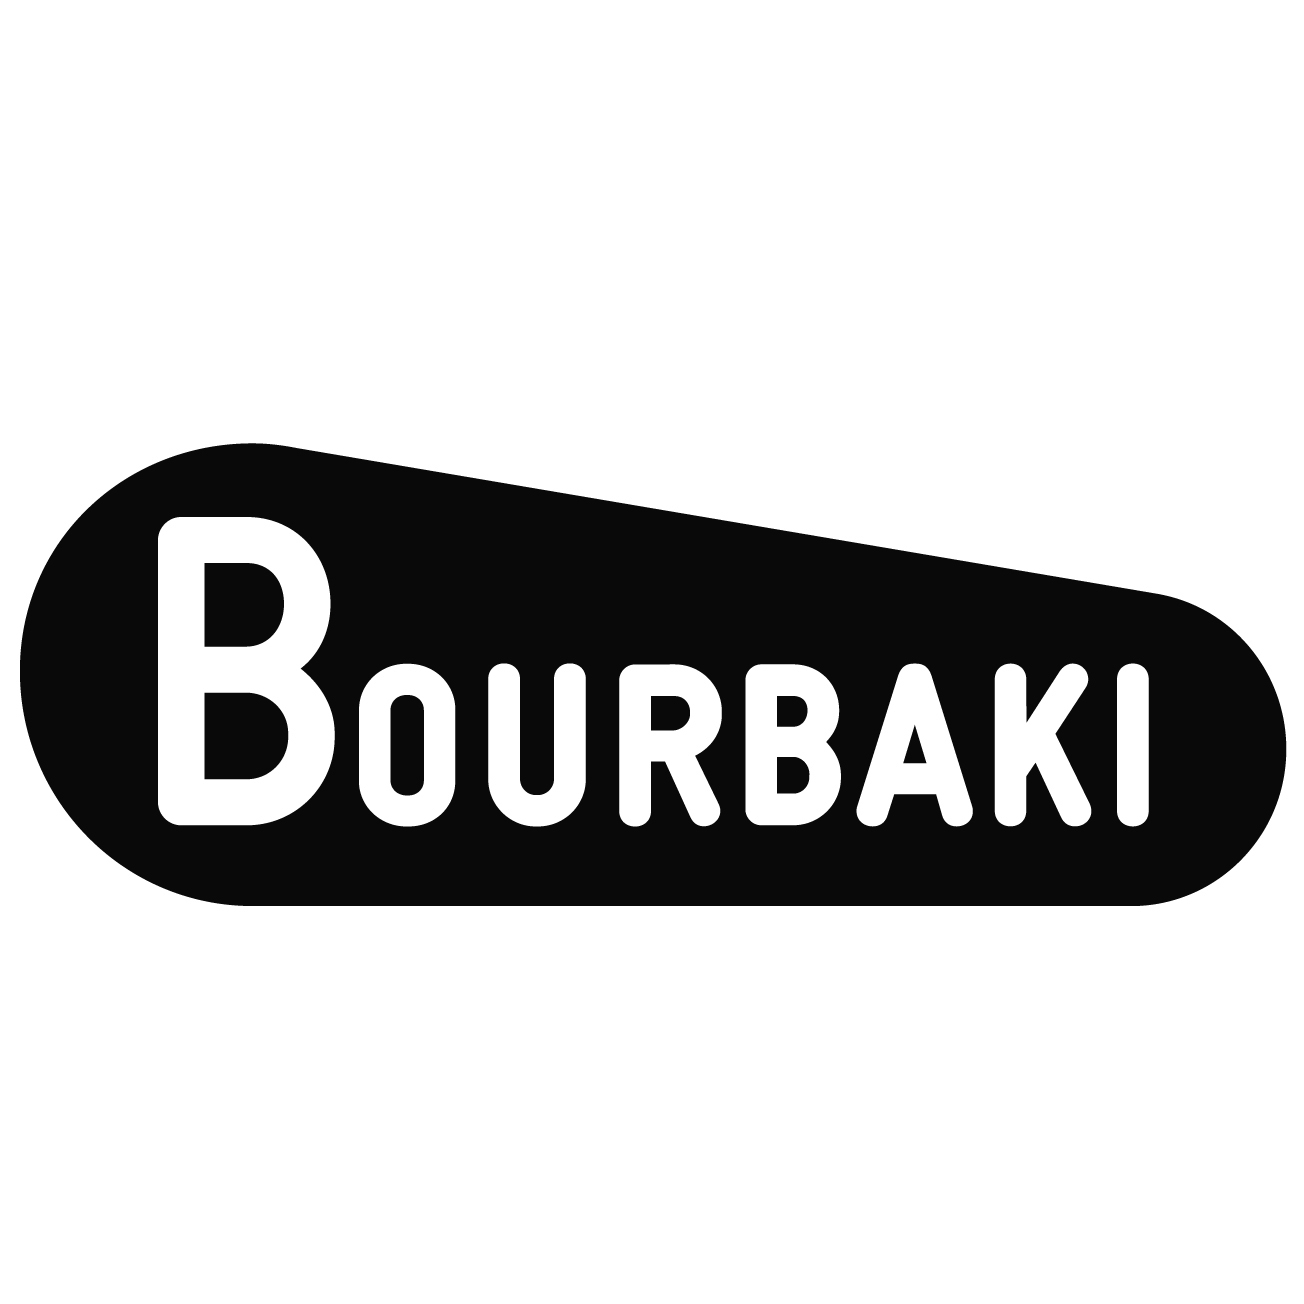 Bourbaki